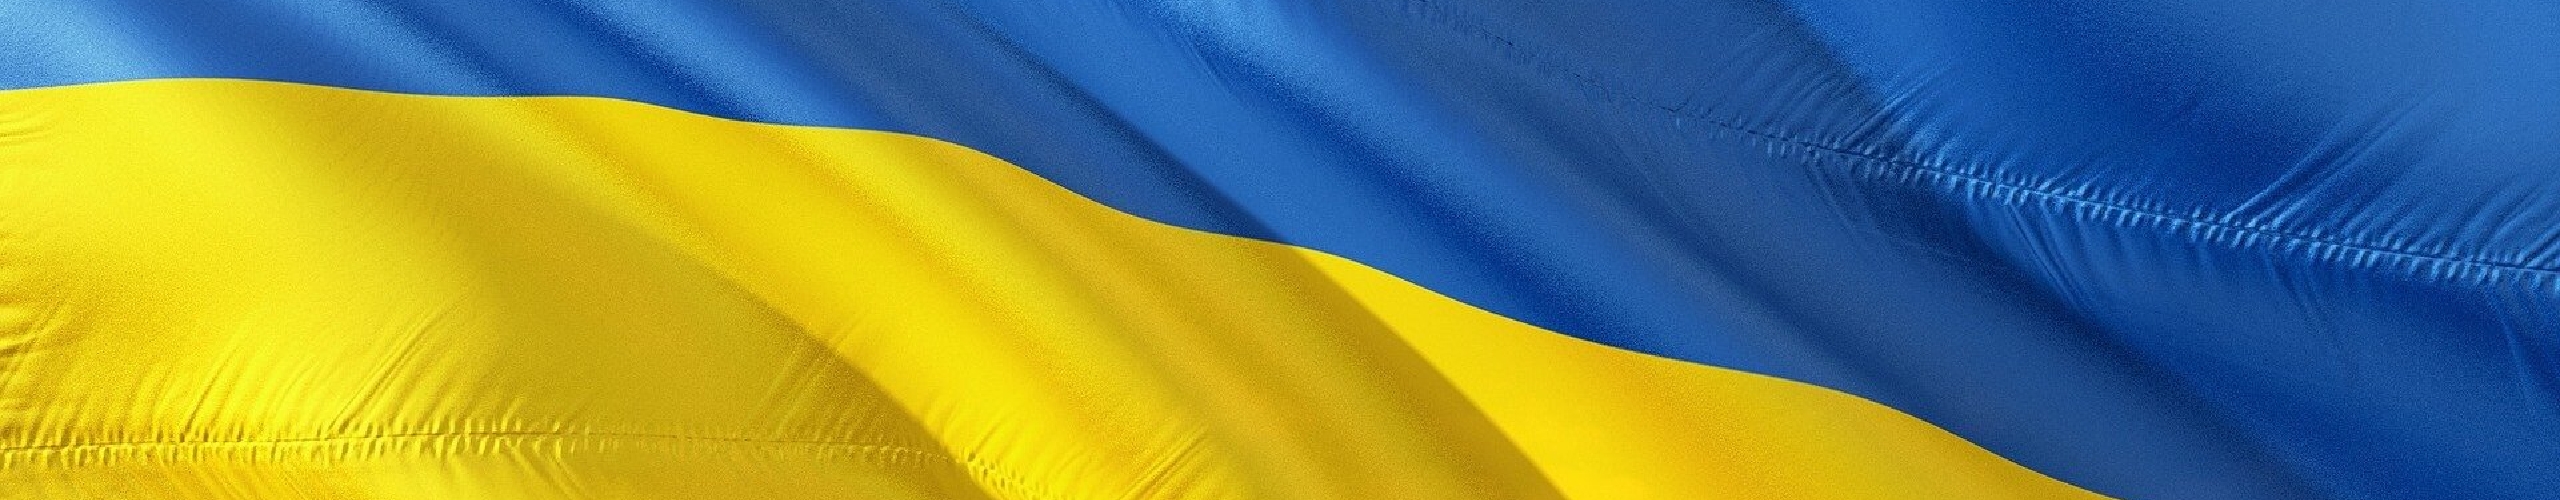 Ukraine flag panel background